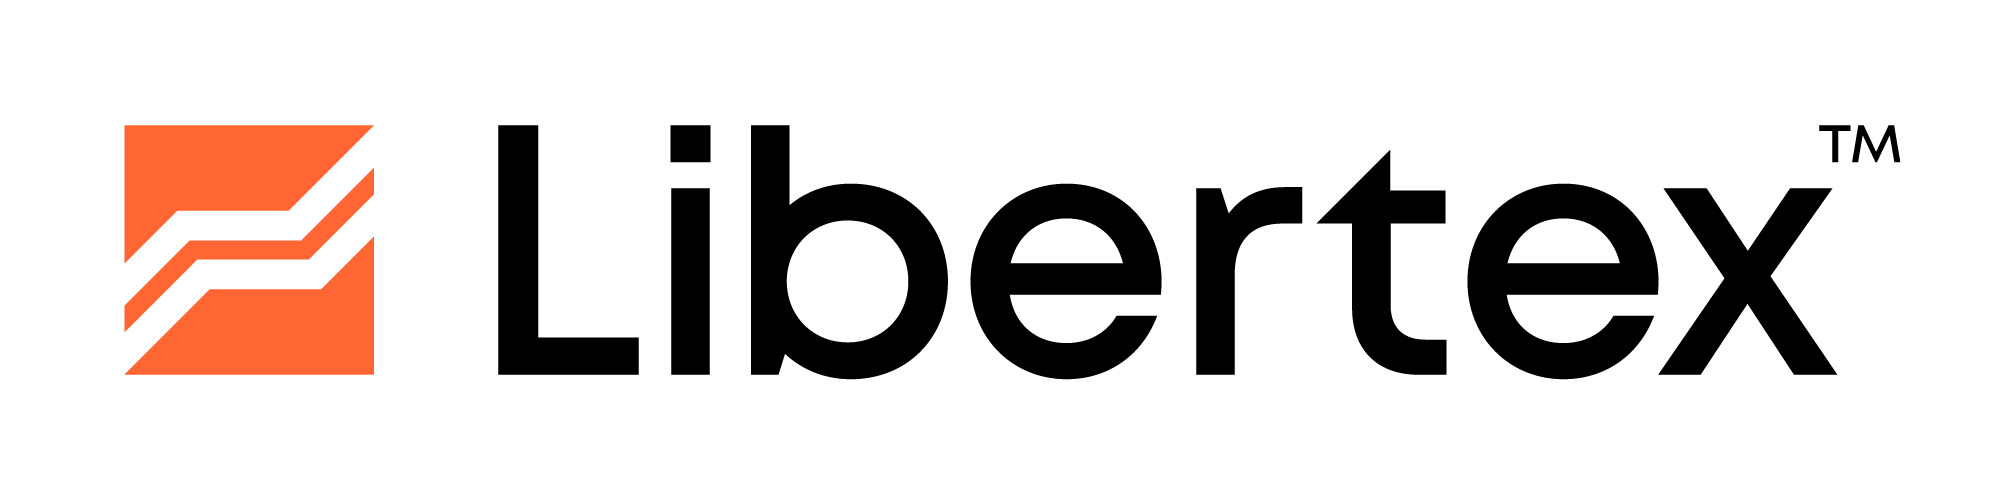 logotipos libertex